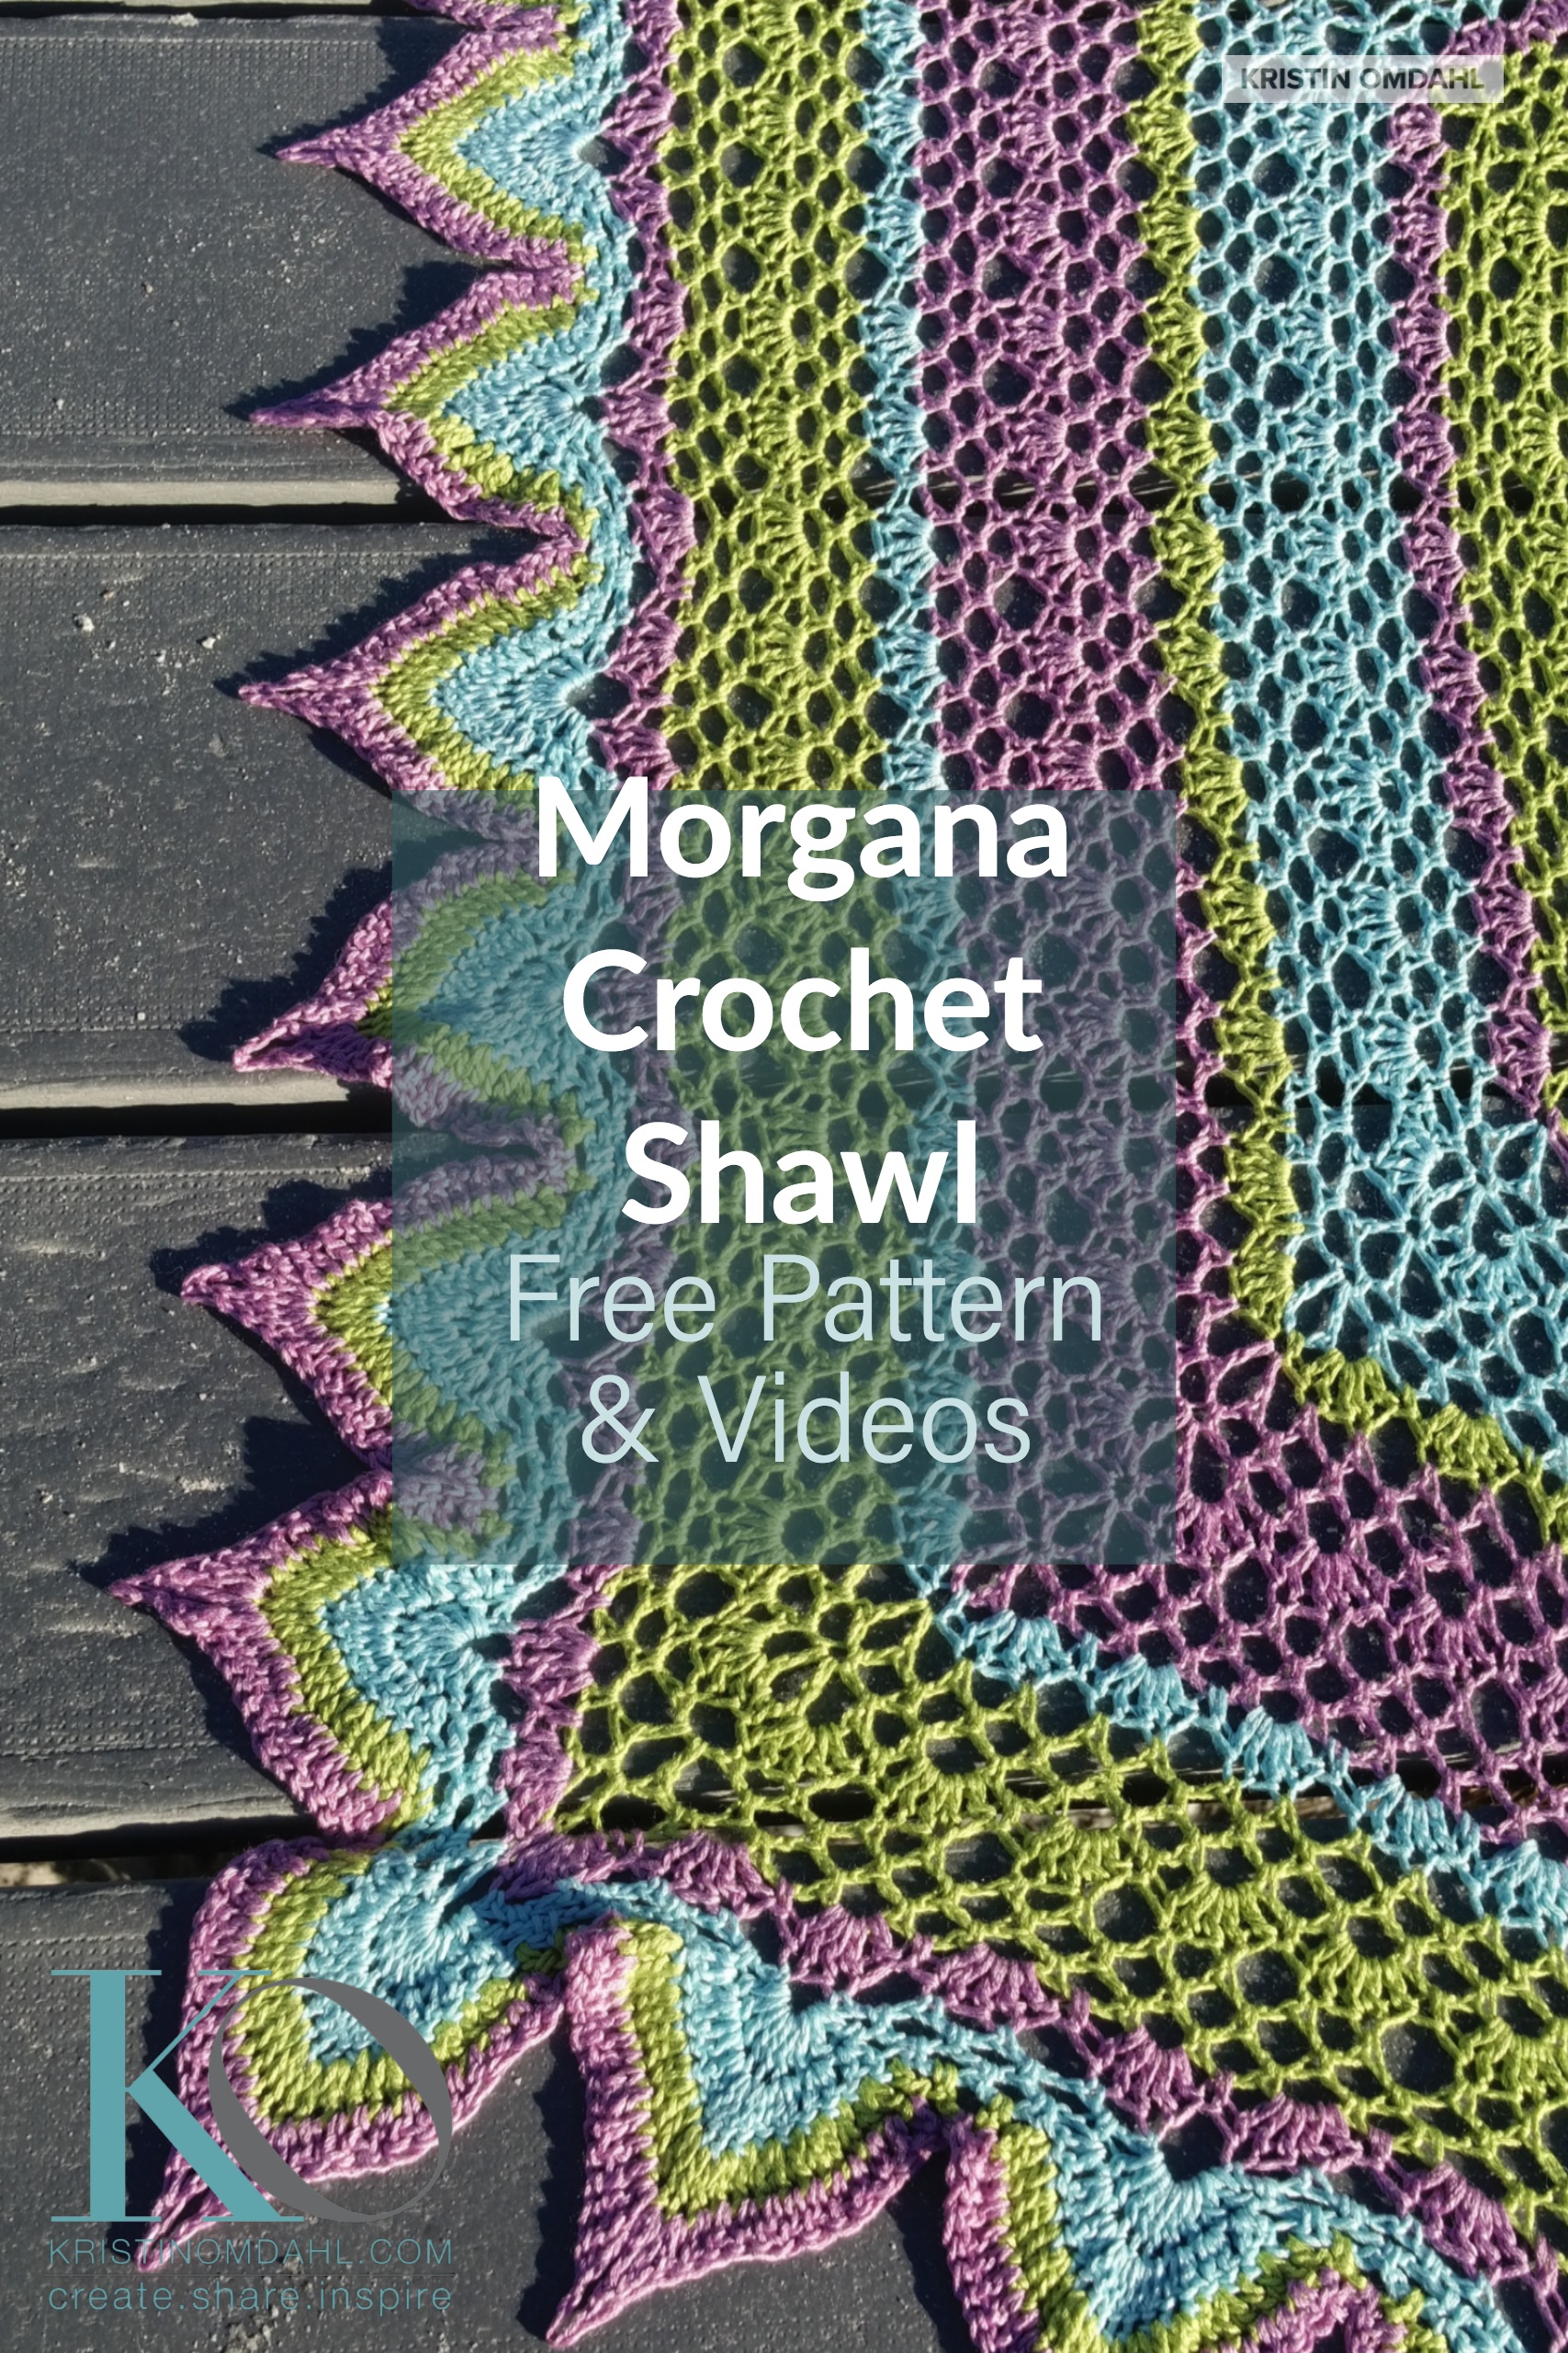 Morgana Crochet Shawl Free Crochet Pattern By Kristin Omdahl Kristin Omdahl,Chippendale Furniture Catalogue